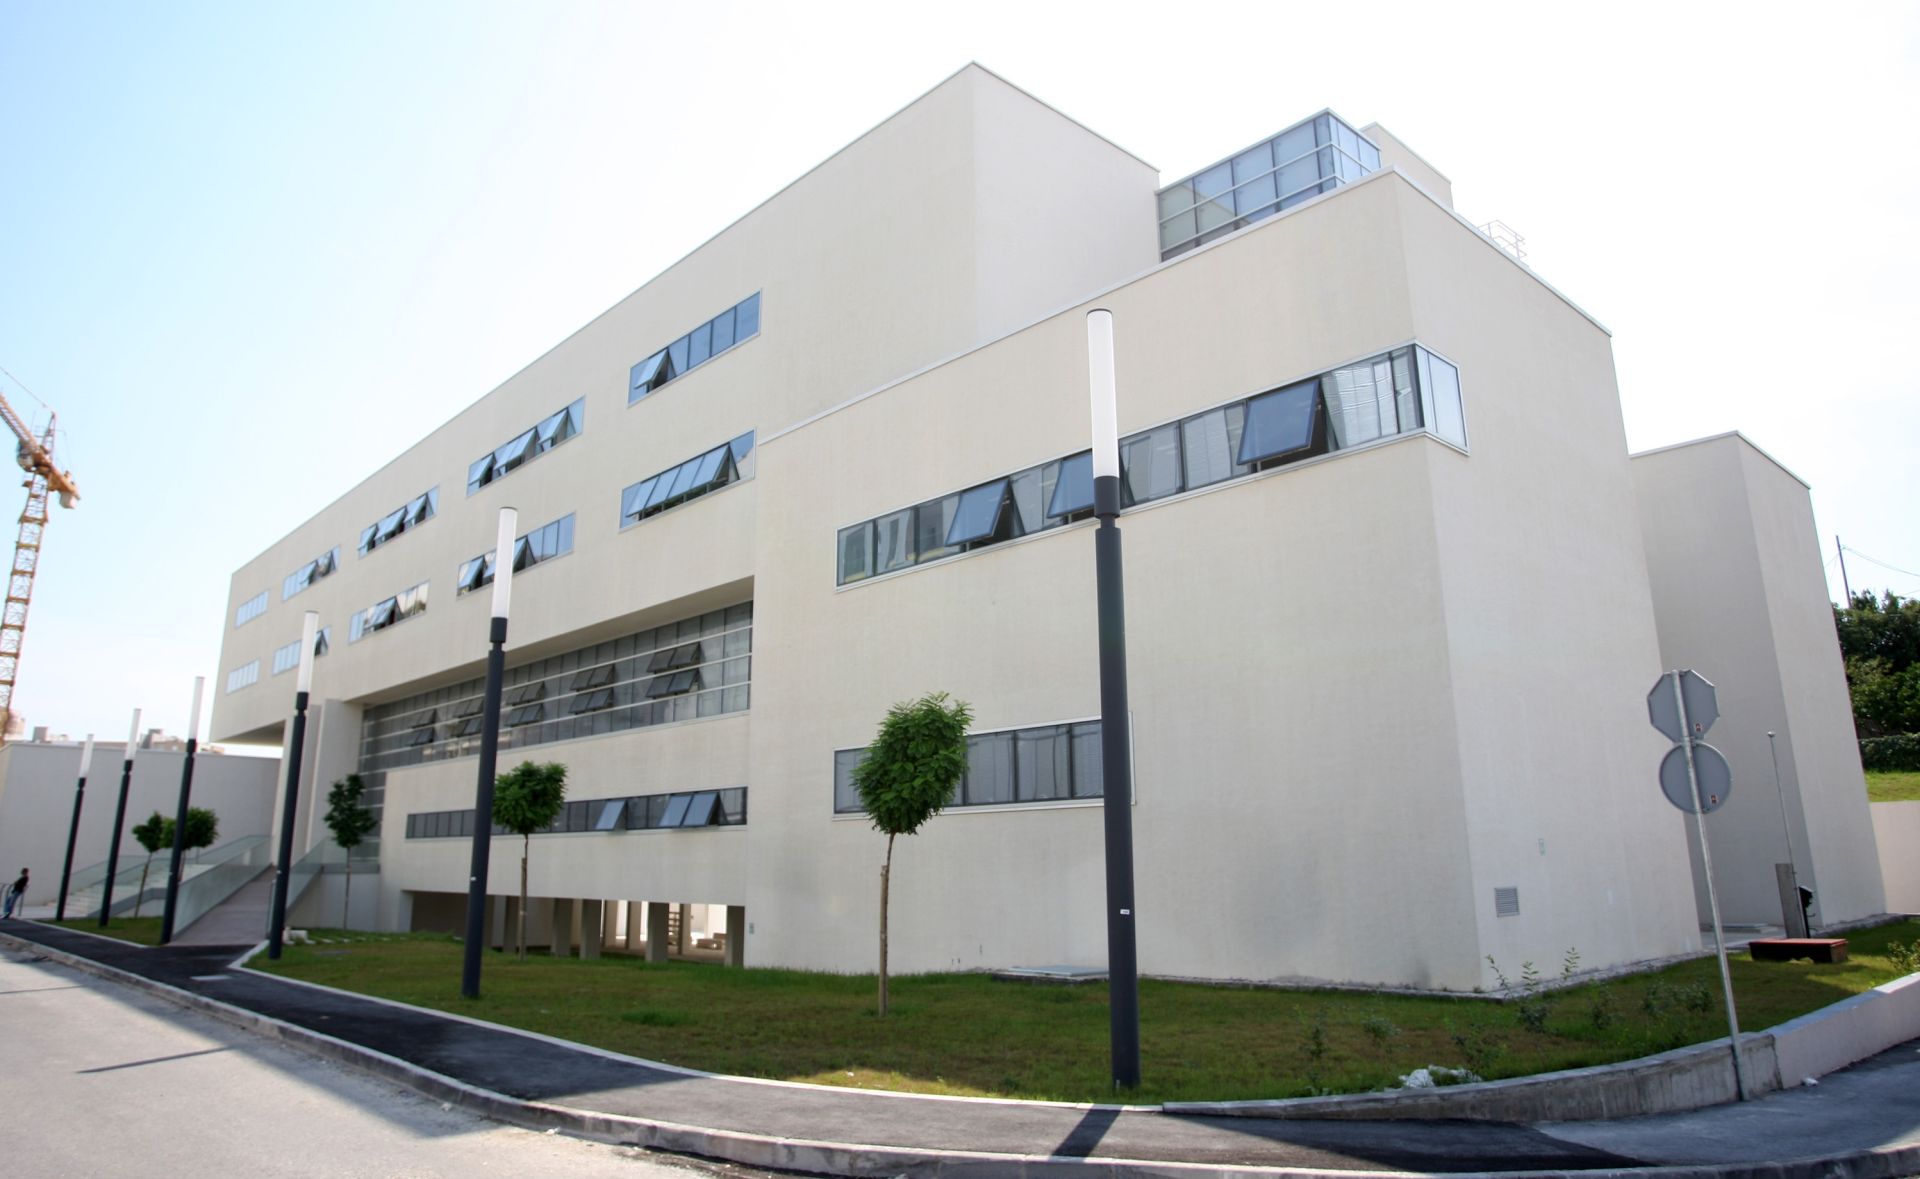 20.08.2013., Split - Nova zgrada Srednje medicinske skole uskoro bi trebala biti otvorena. 
Photo: Ivo Cagalj/PIXSELL